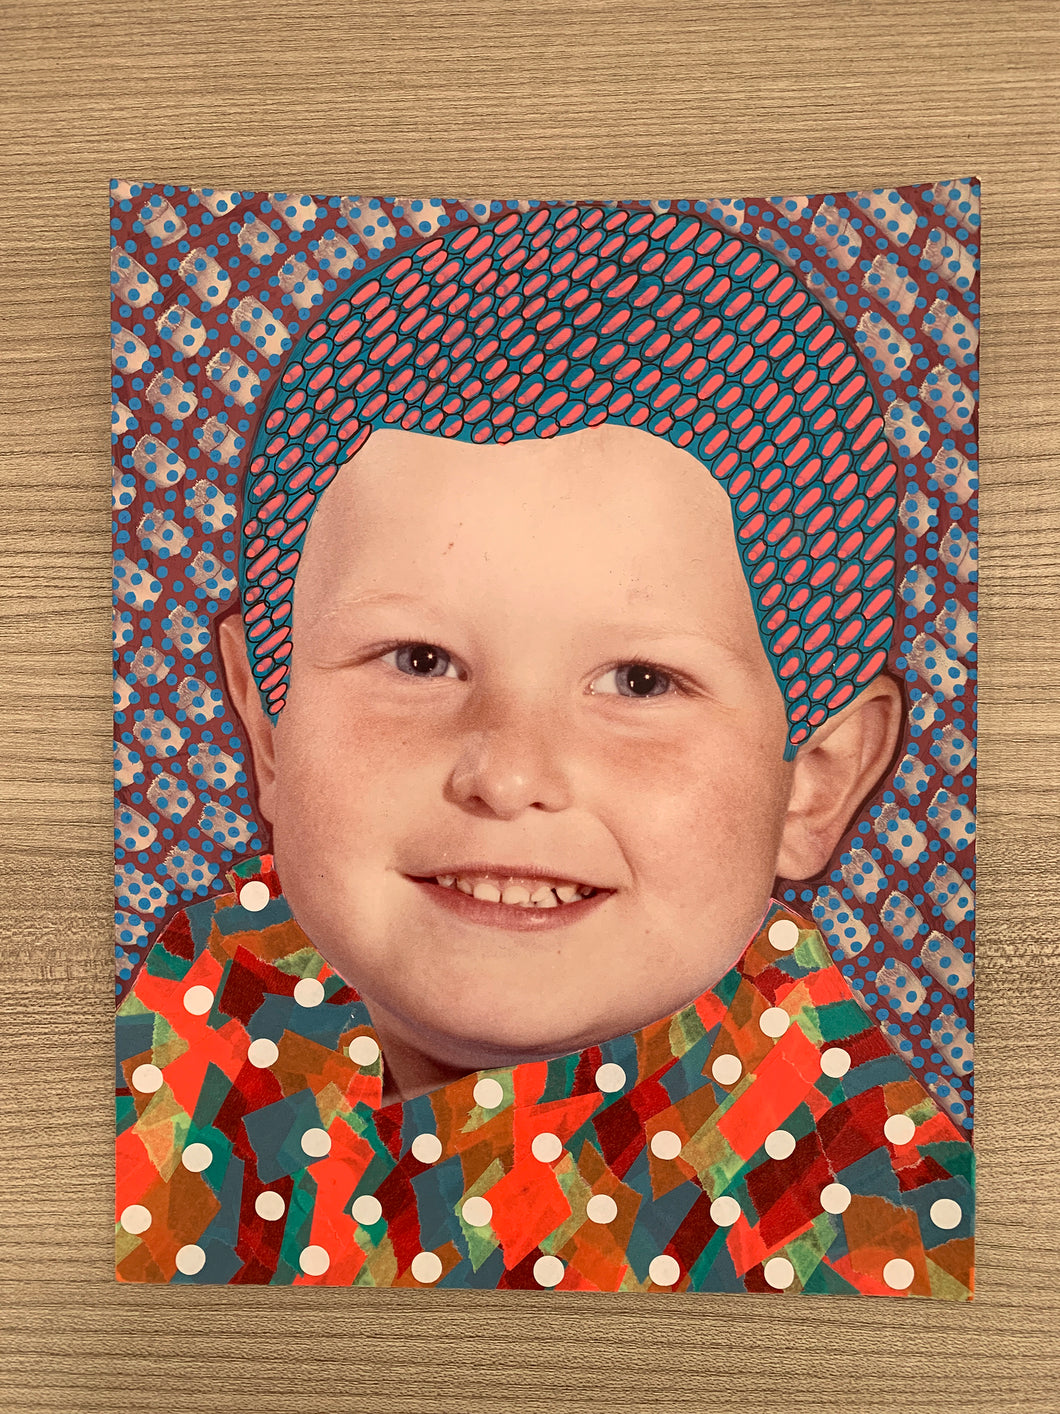 Sample Sale Baby Boy Portrait Collage